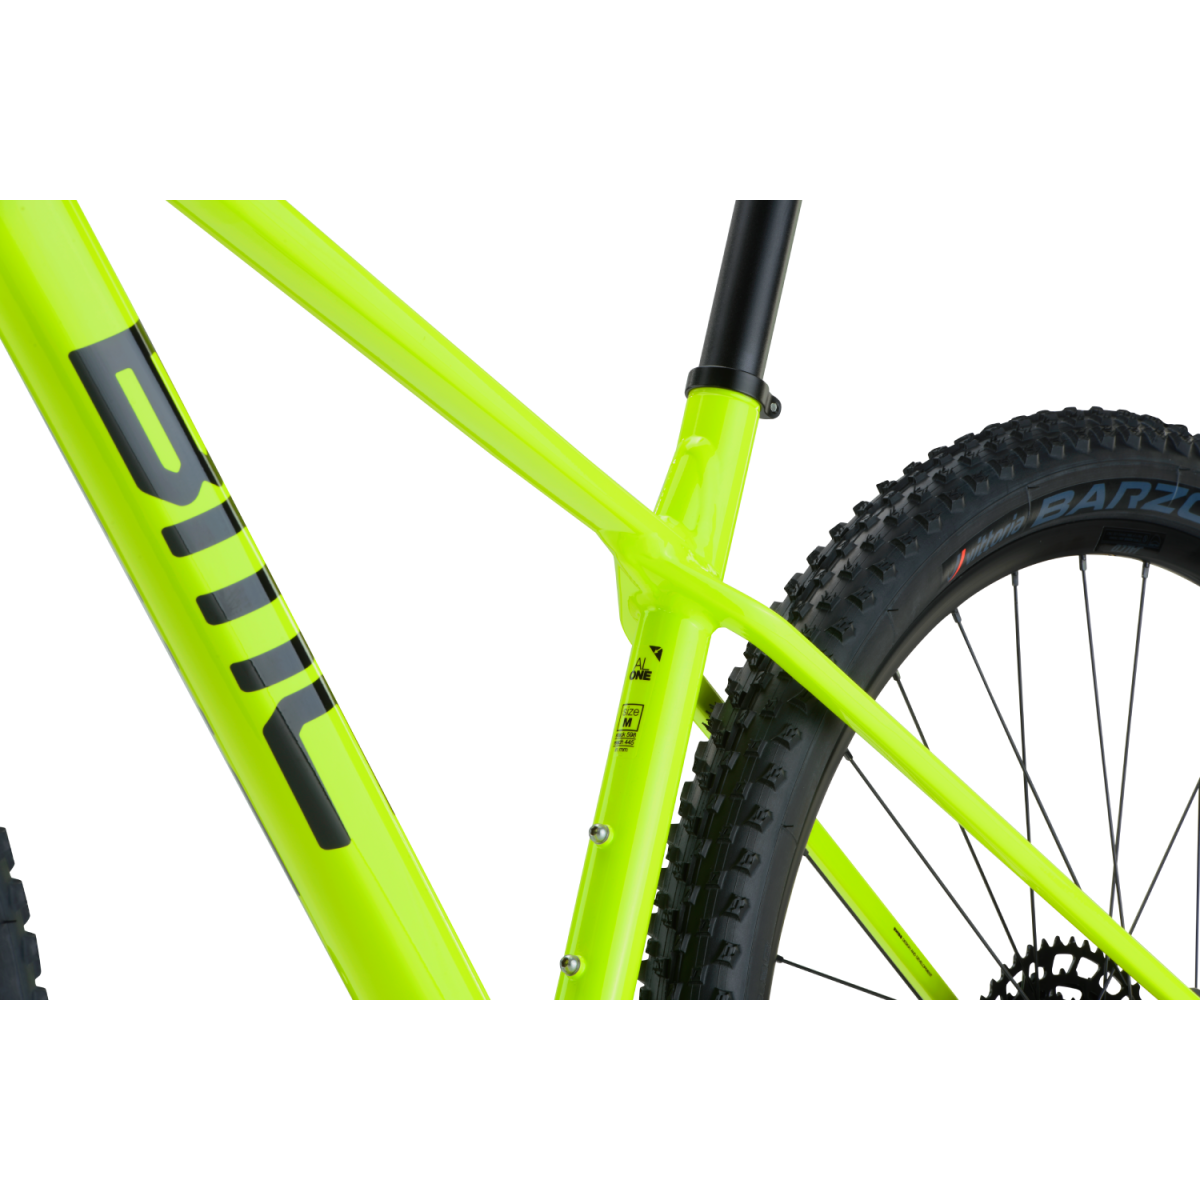 BMC Twostroke AL One kalnų dviratis / Poison Green - Black